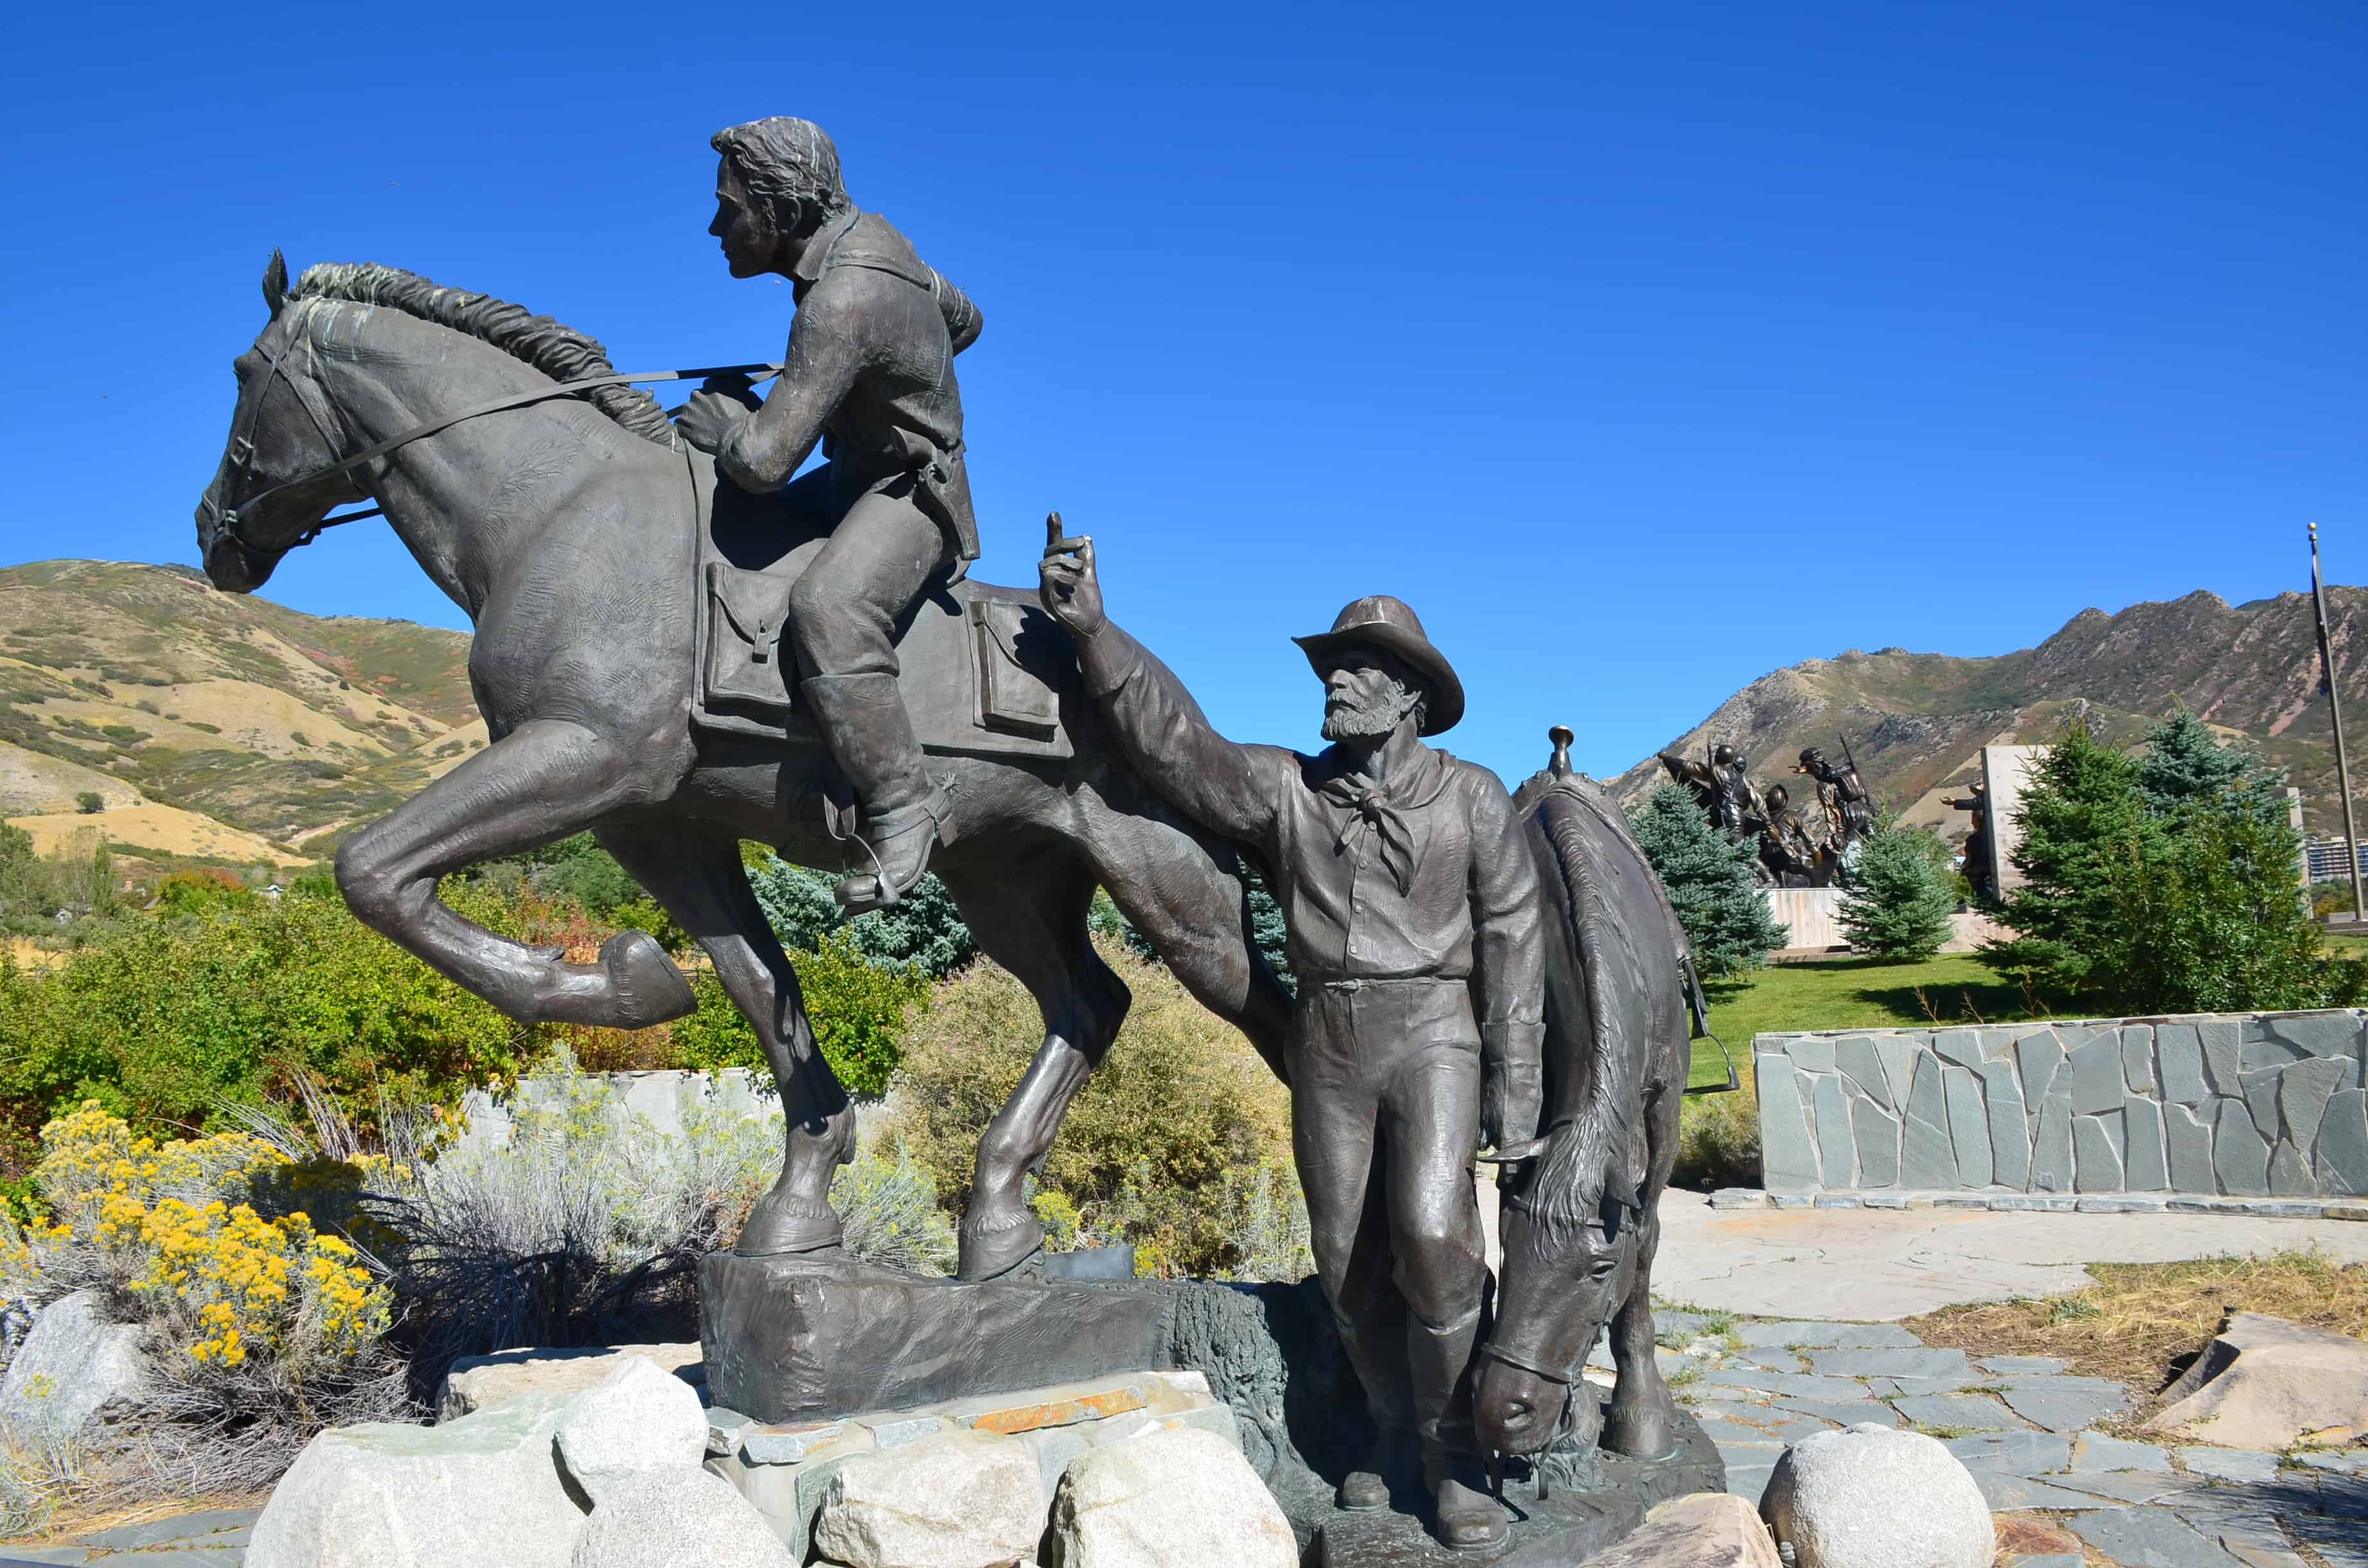 Pony Express monument in Salt Lake City, Utah